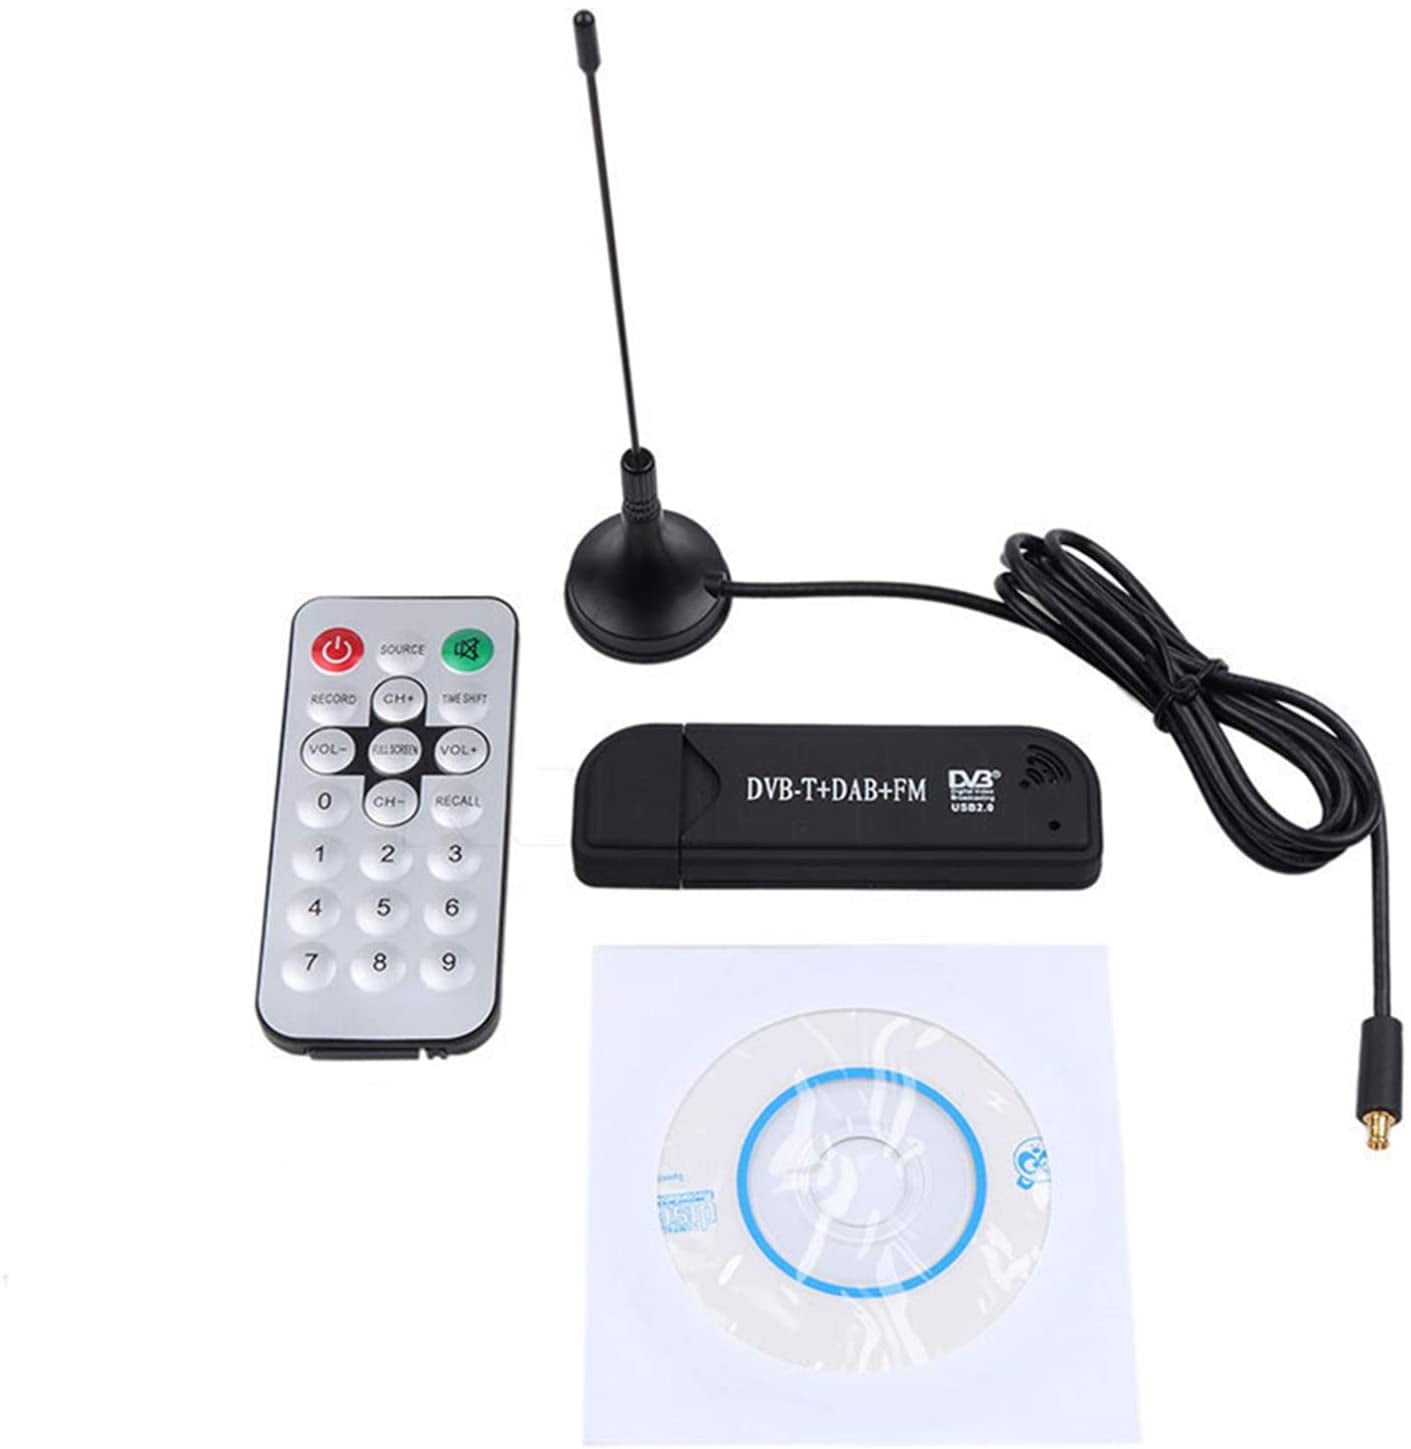 Color : White Passion Waner with Remote Control Digital RTL2832U+R820T DVB-T SDR+DAB+FM USB 2.0 Digital TV Dongle/Receiver 